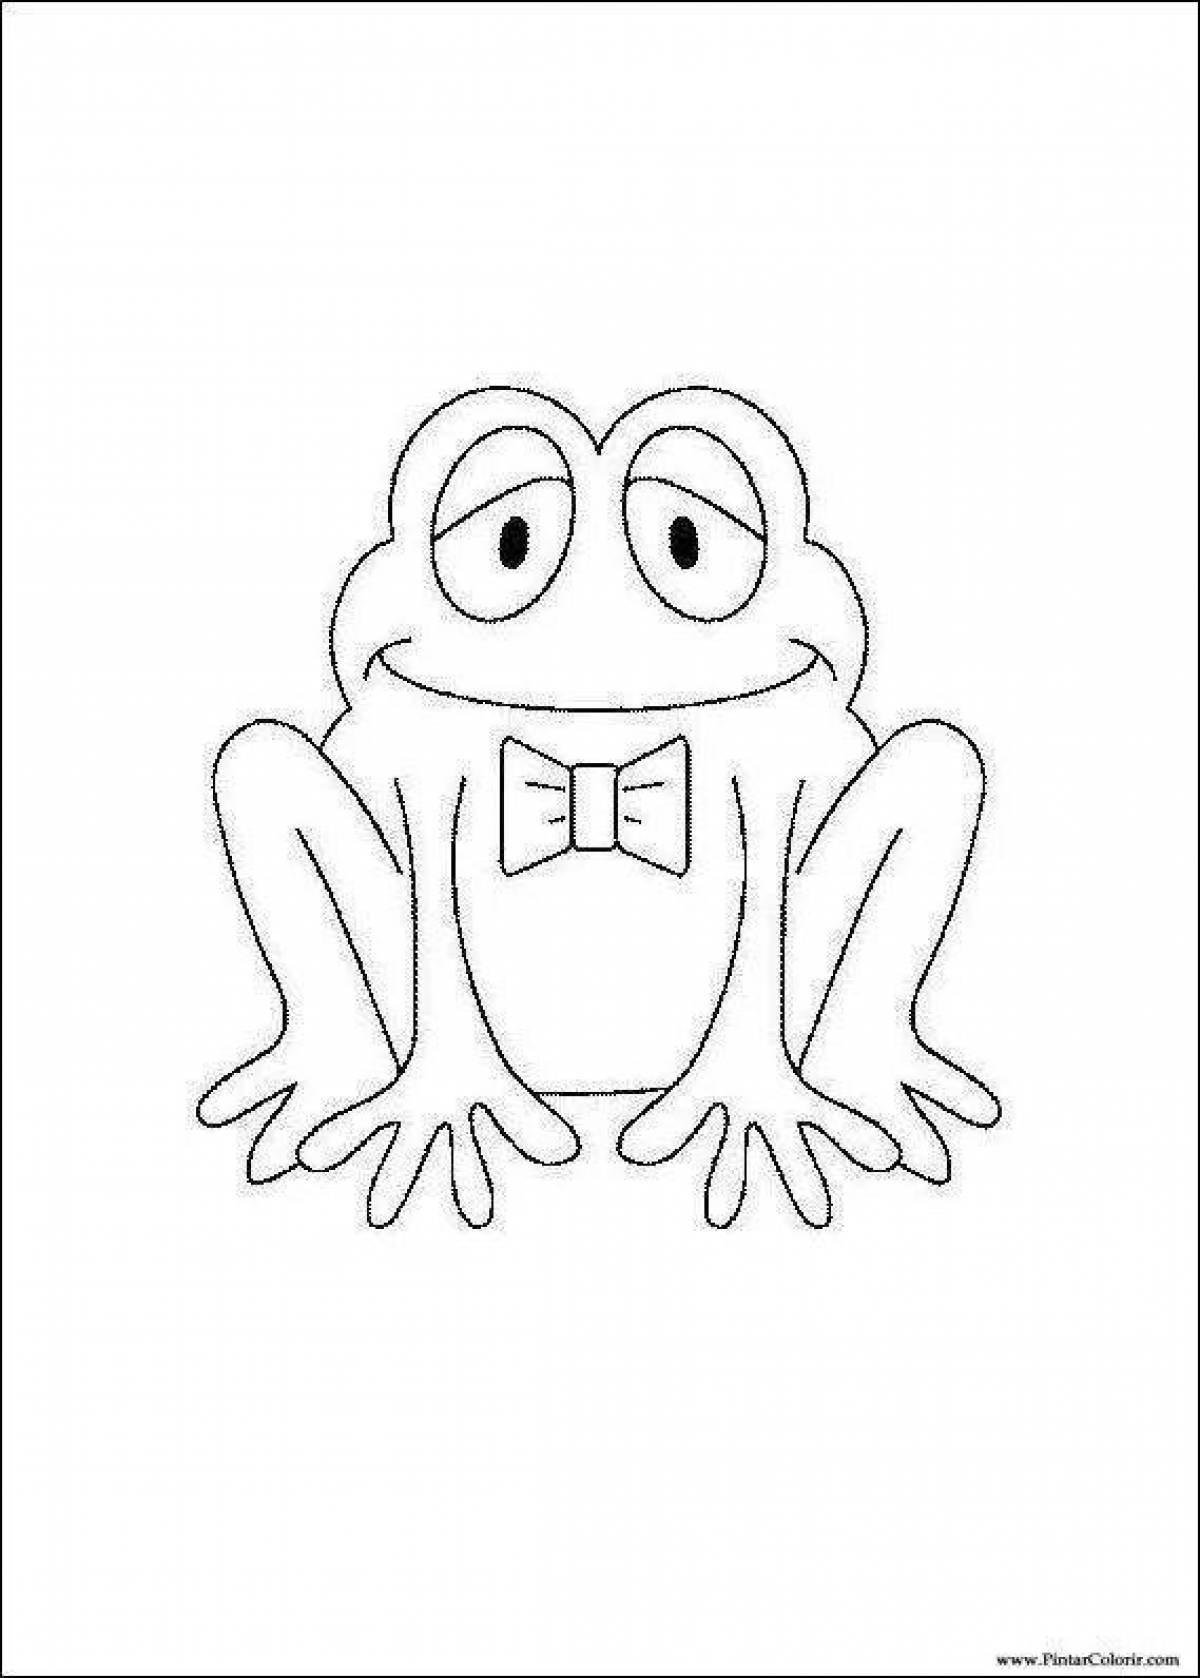 Creative tik tok frog coloring page